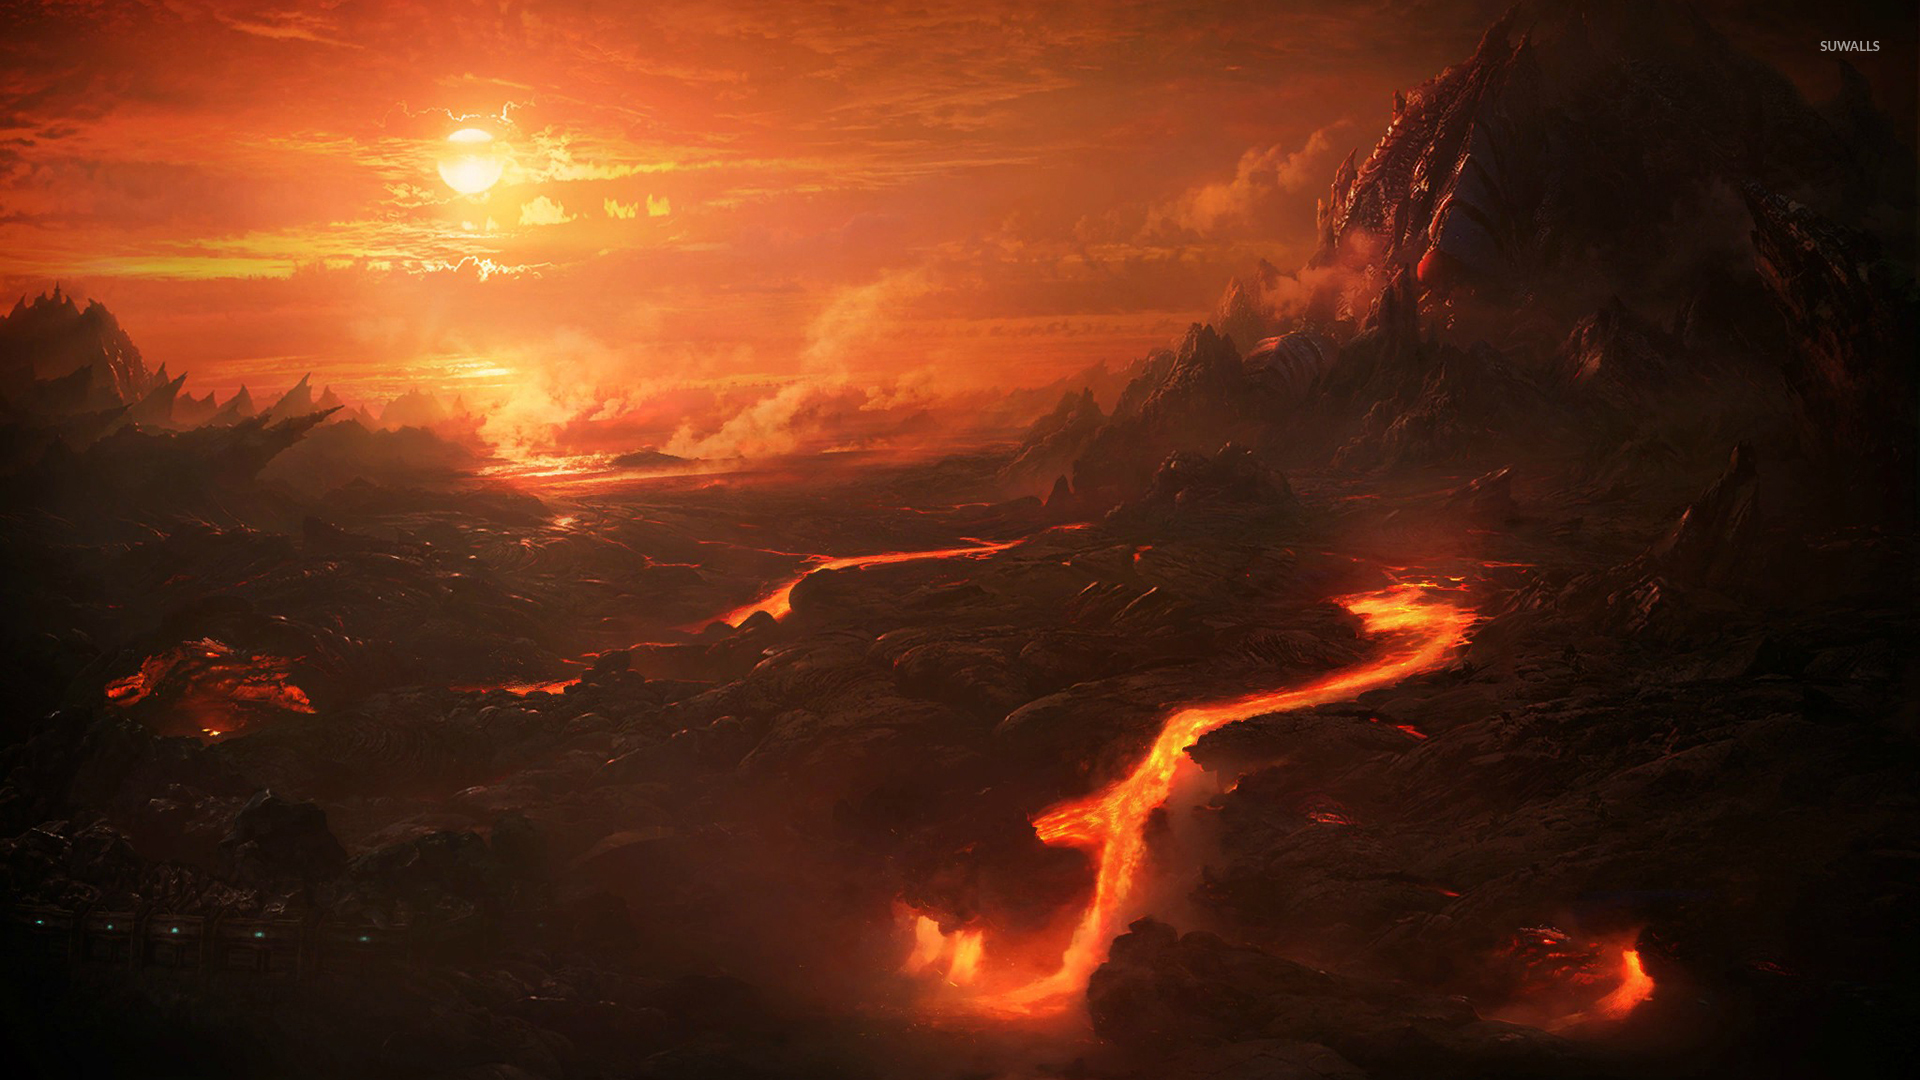 Burning Mountains At Sunset Wallpaper - Fantasy Wallpapers - #51471 E4C